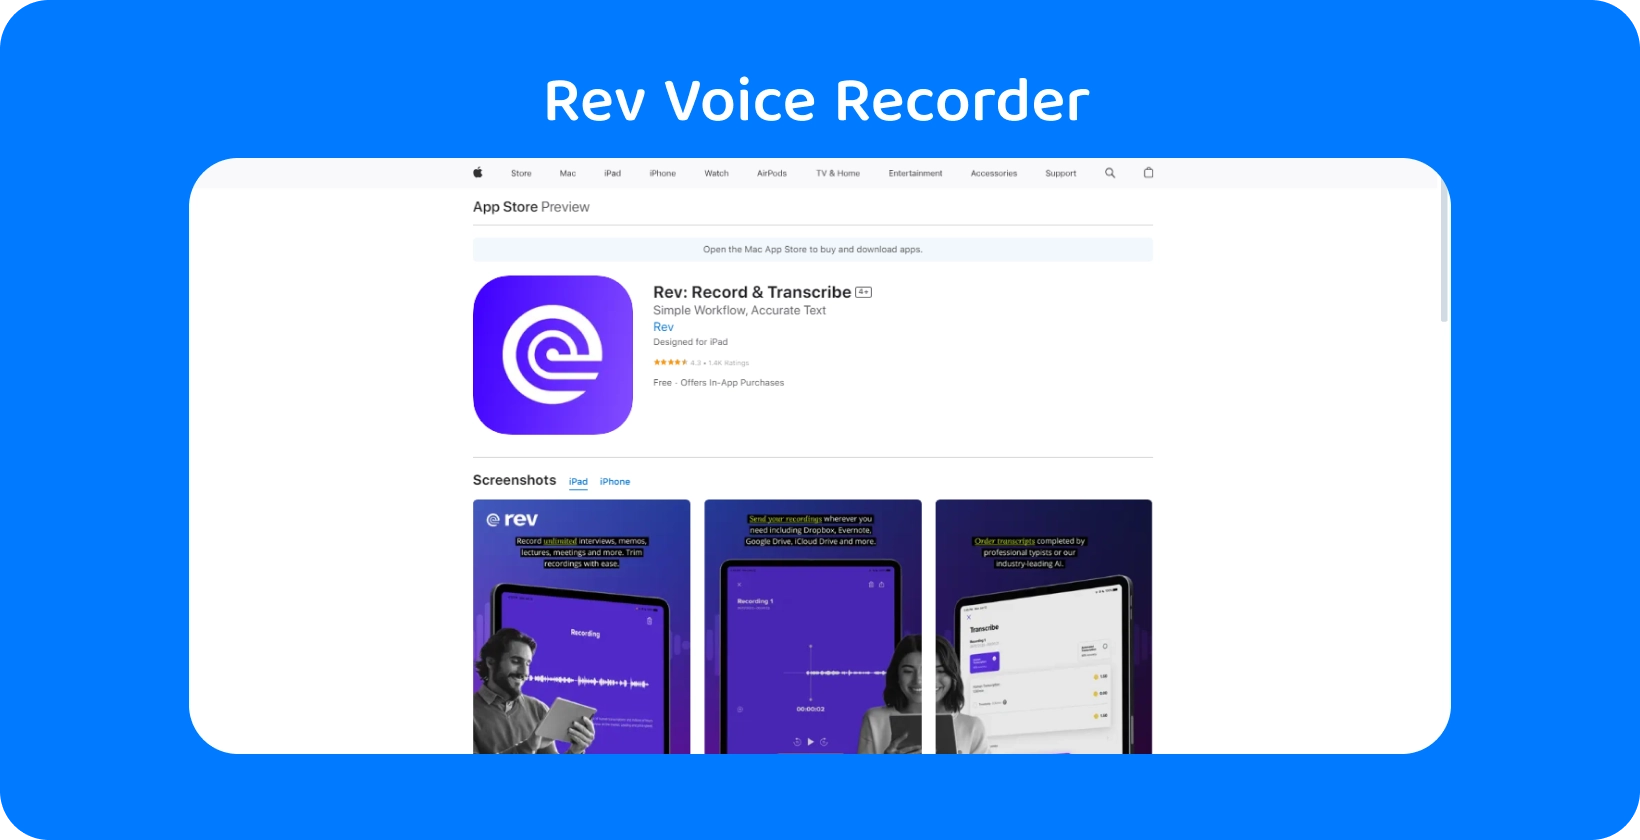 Rev Voice Recorder εφαρμογή στο Apple App Store, επισημαίνοντας τις κομψές δυνατότητες σχεδιασμού και μεταγραφής.